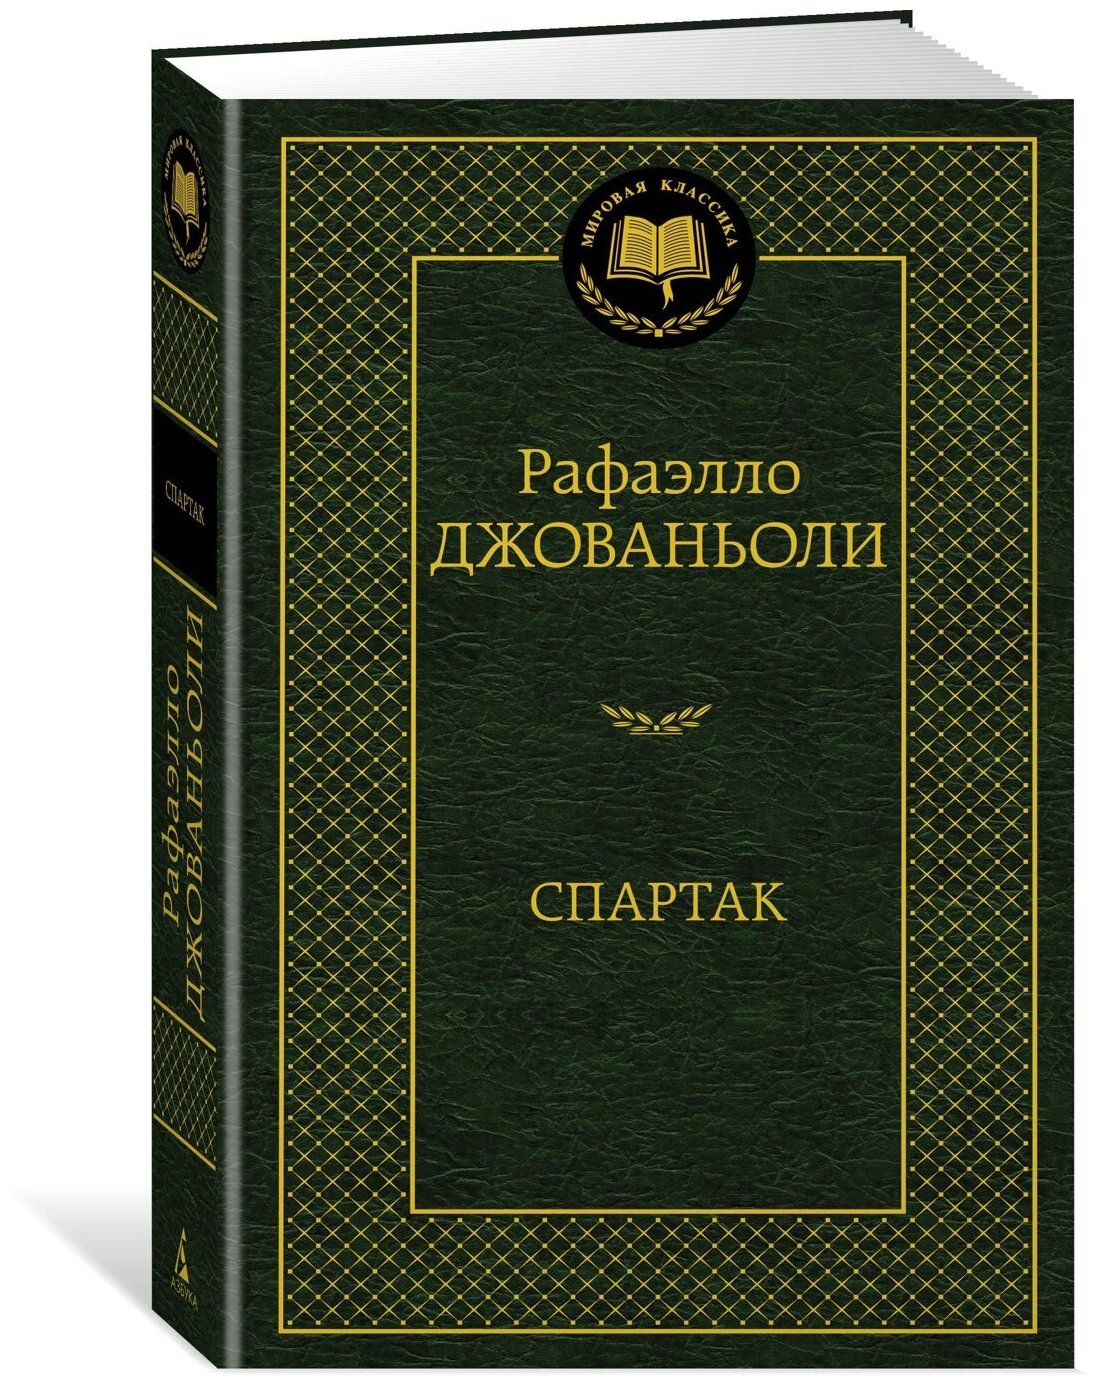 Спартак Книга Джованьоли Рафаэлло 16+